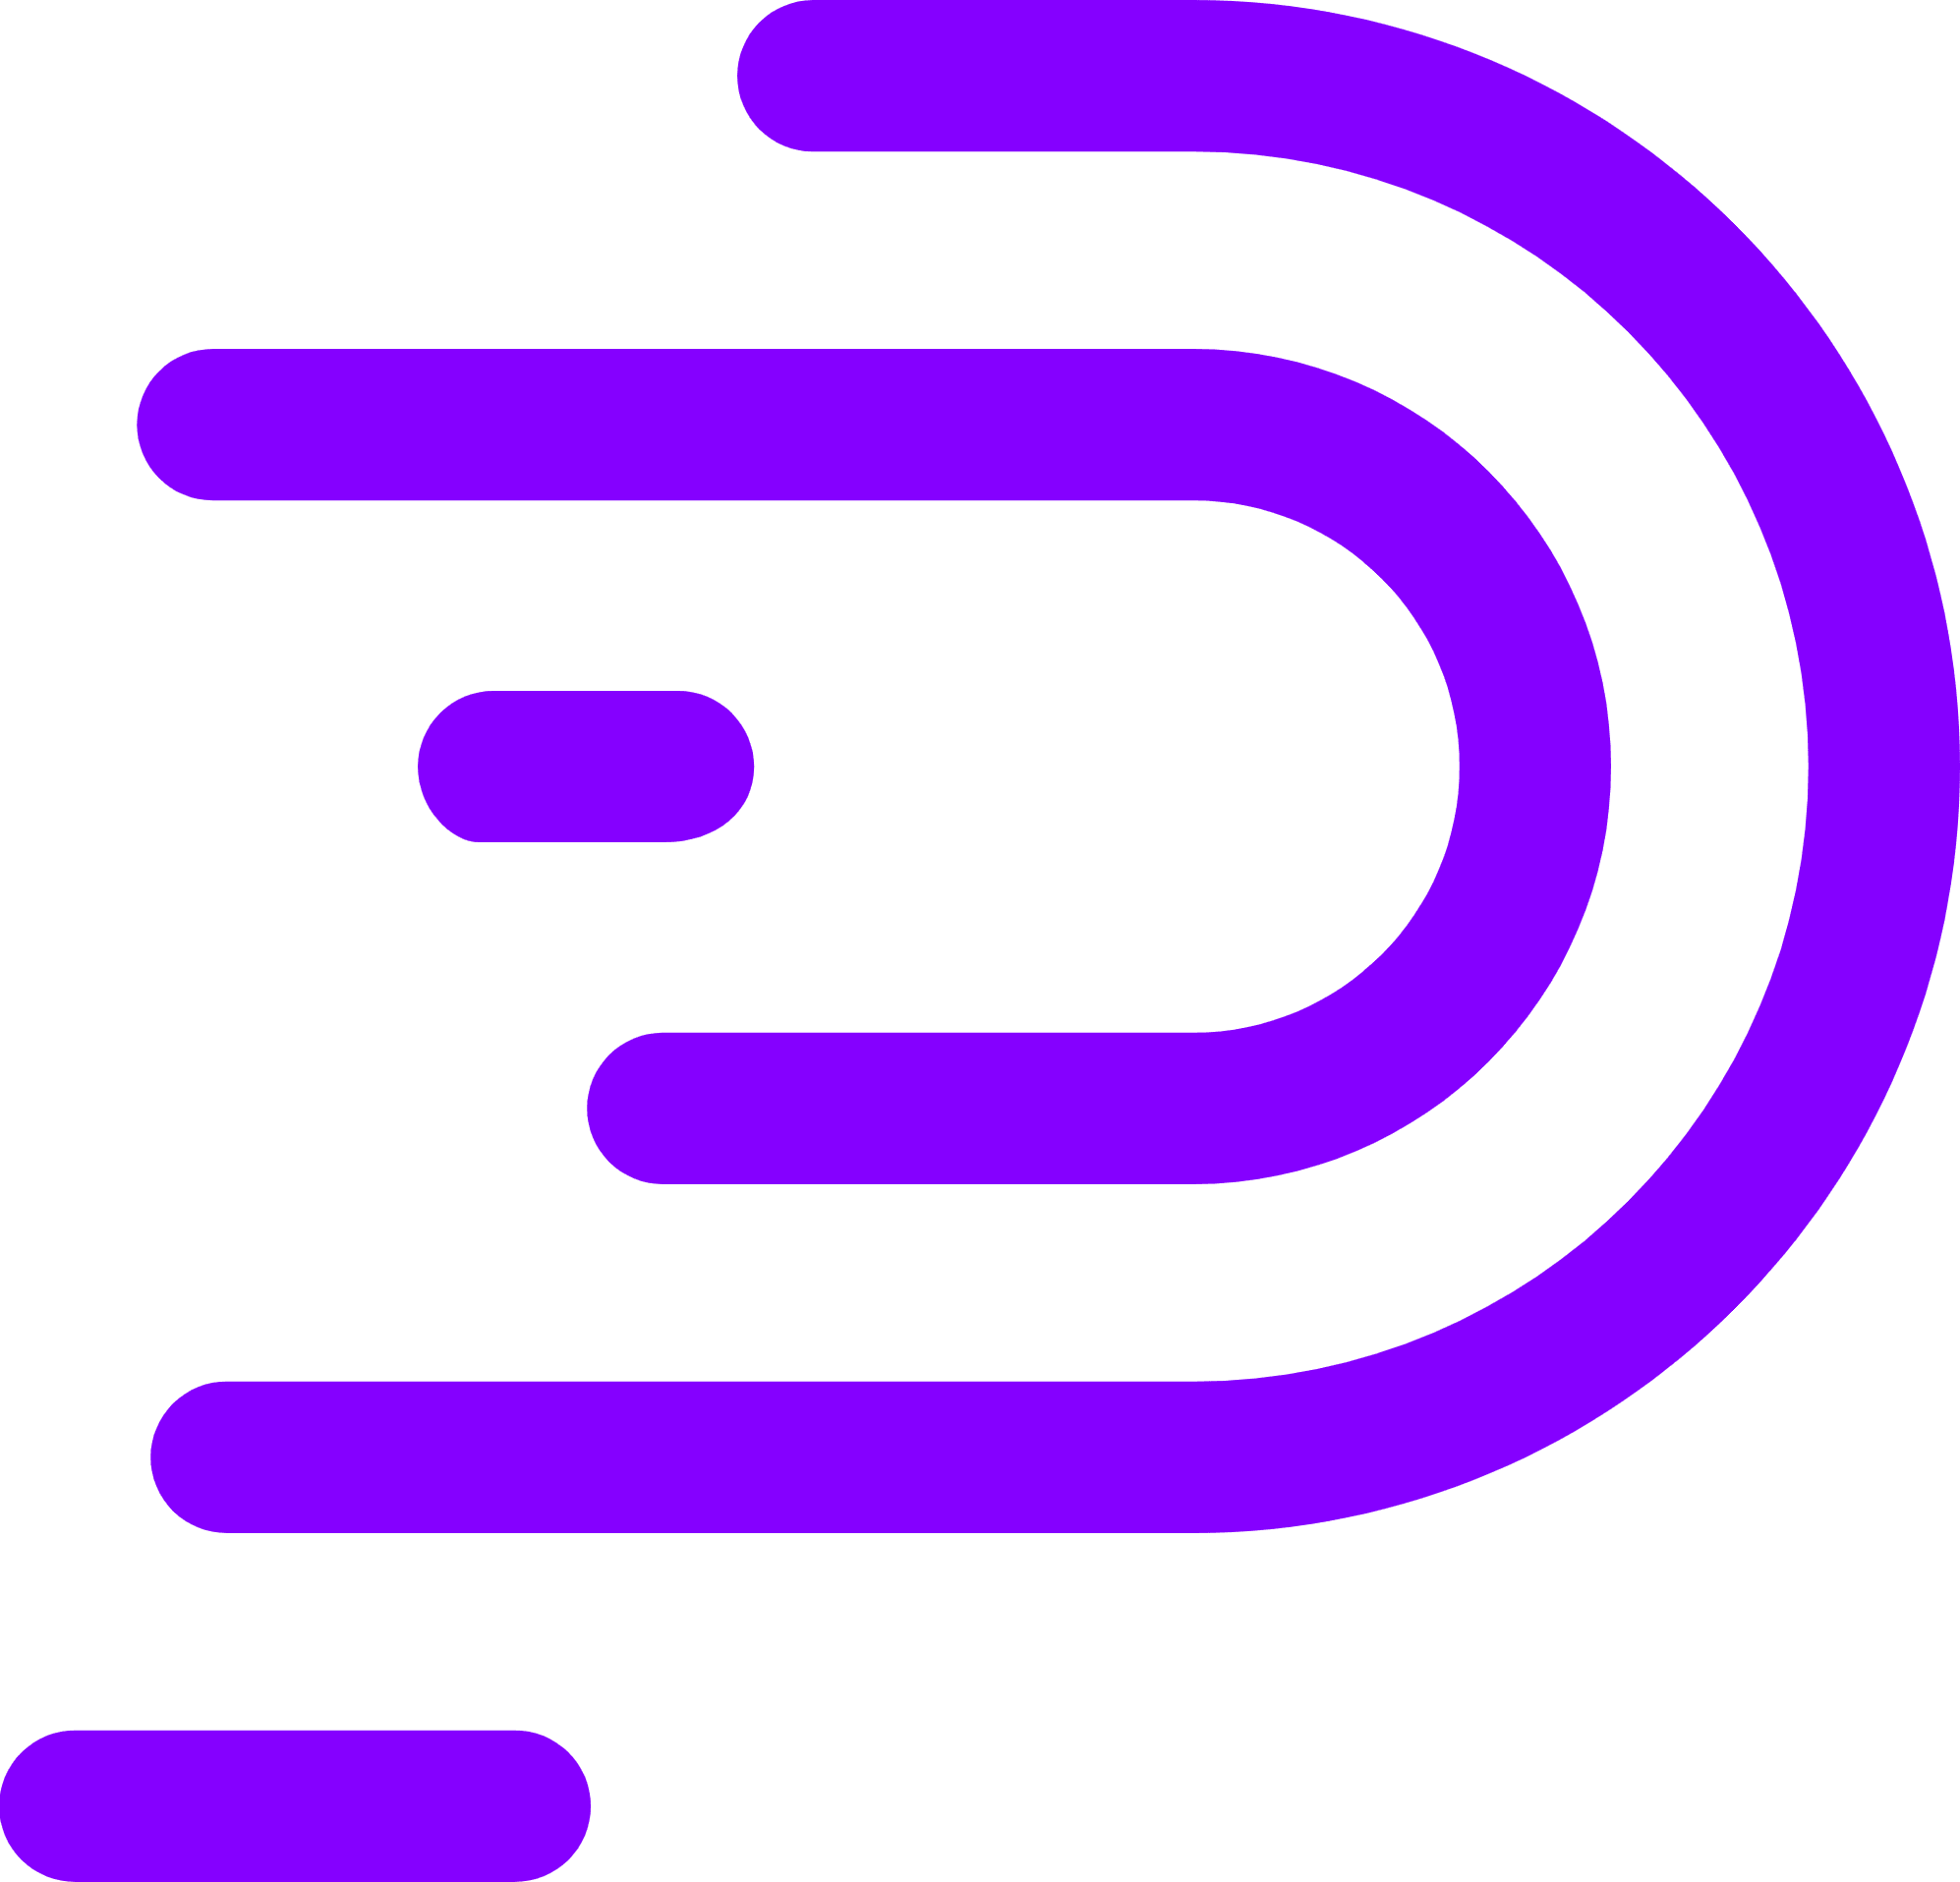 PolySwarm logo in svg format